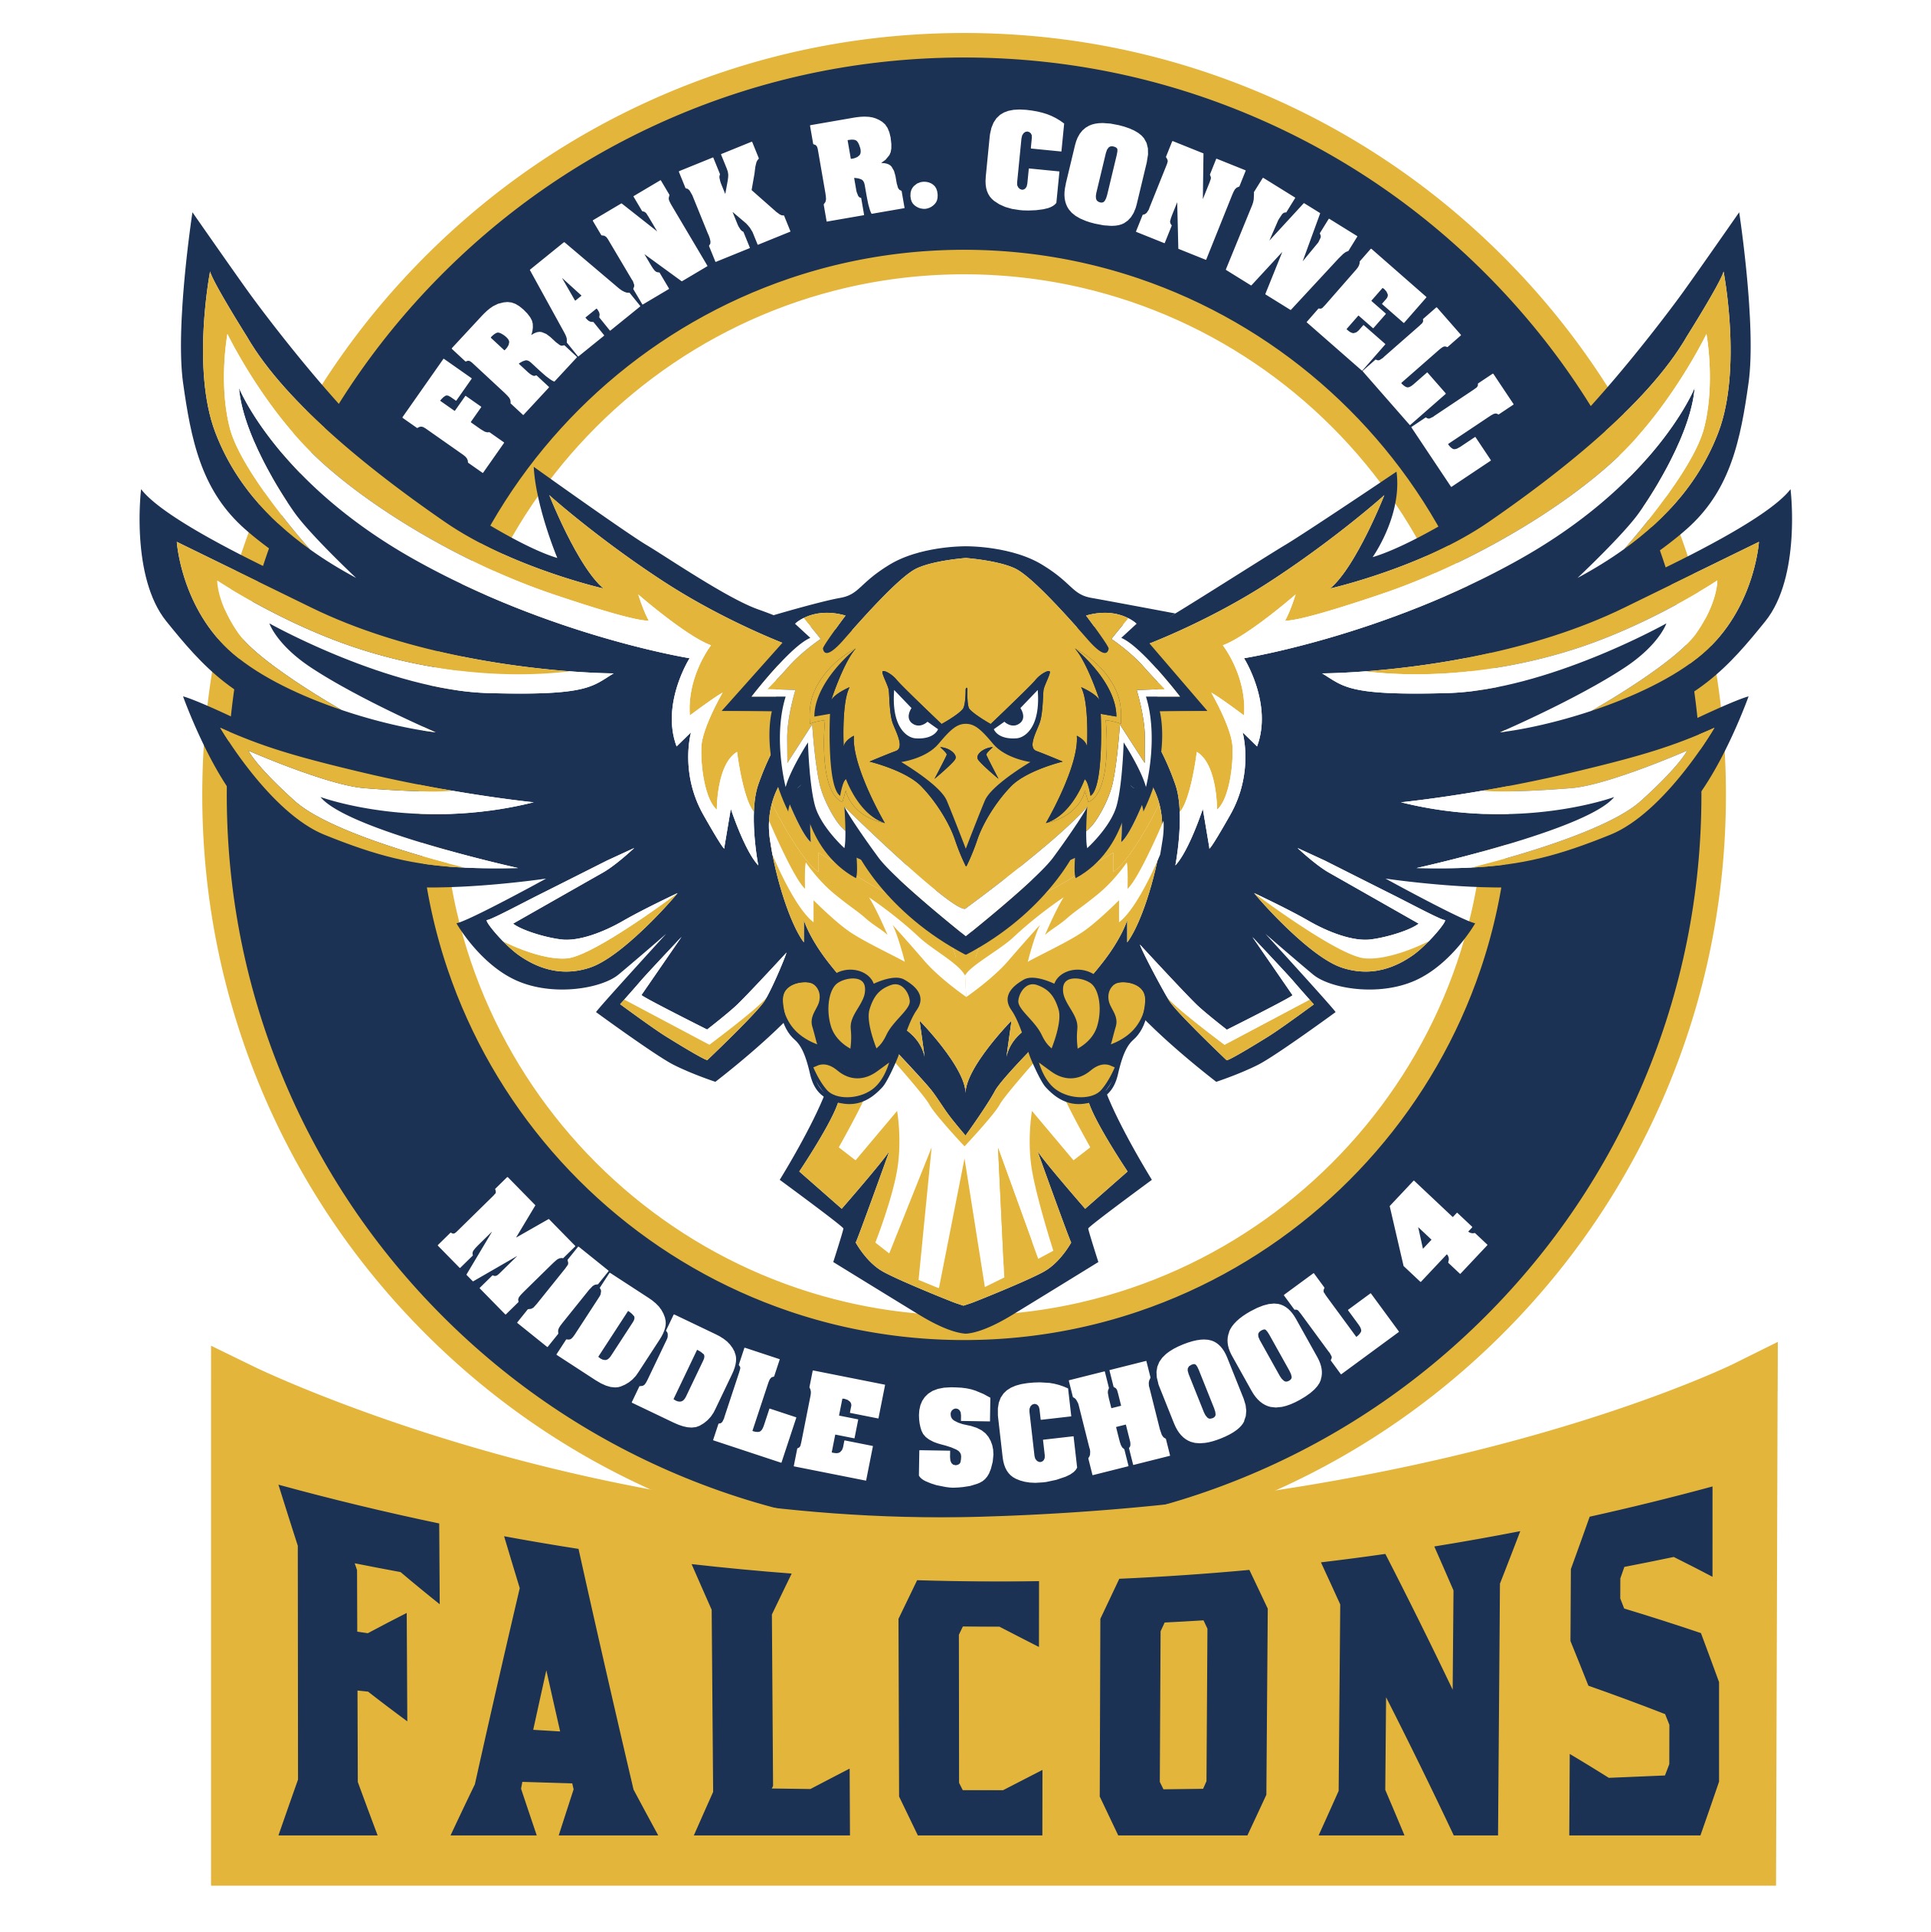 Frank R. Conwell Middle School 